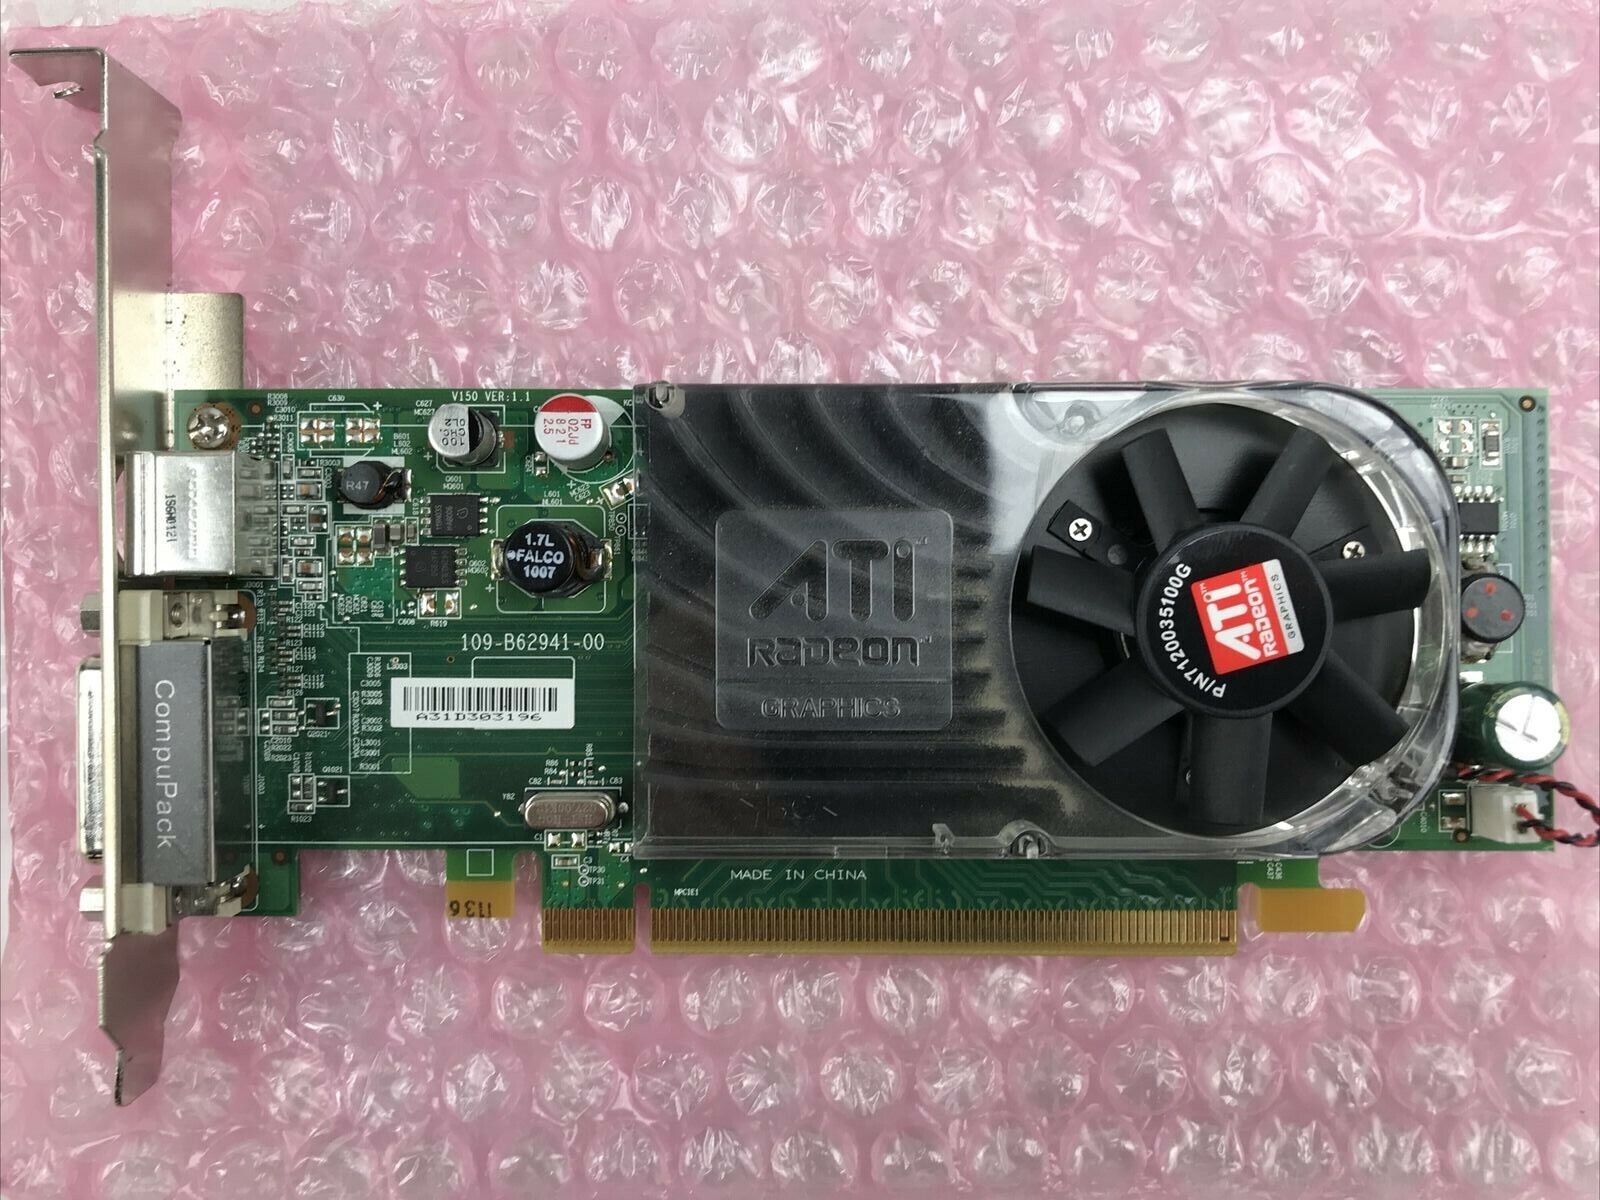 Dell ATI Radeon ATI-102-B62902(B) PCIe  256MB Video Graphics Card